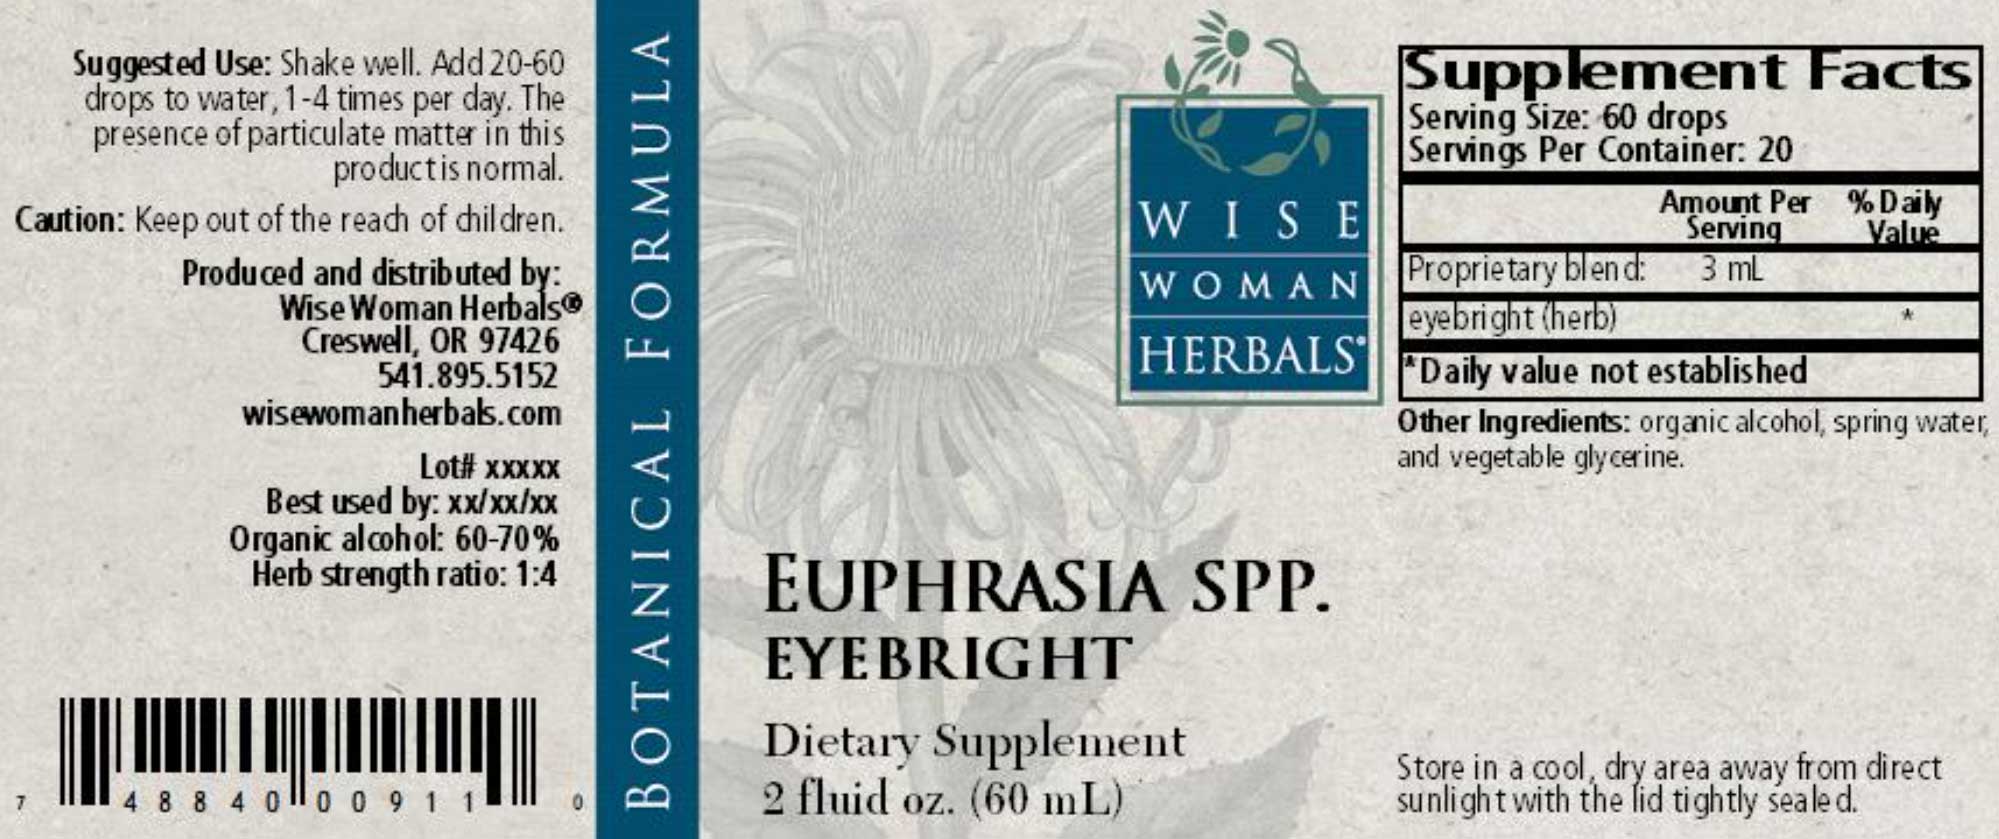 Wise Woman Herbals Euphrasia Stricta Eyebright Label